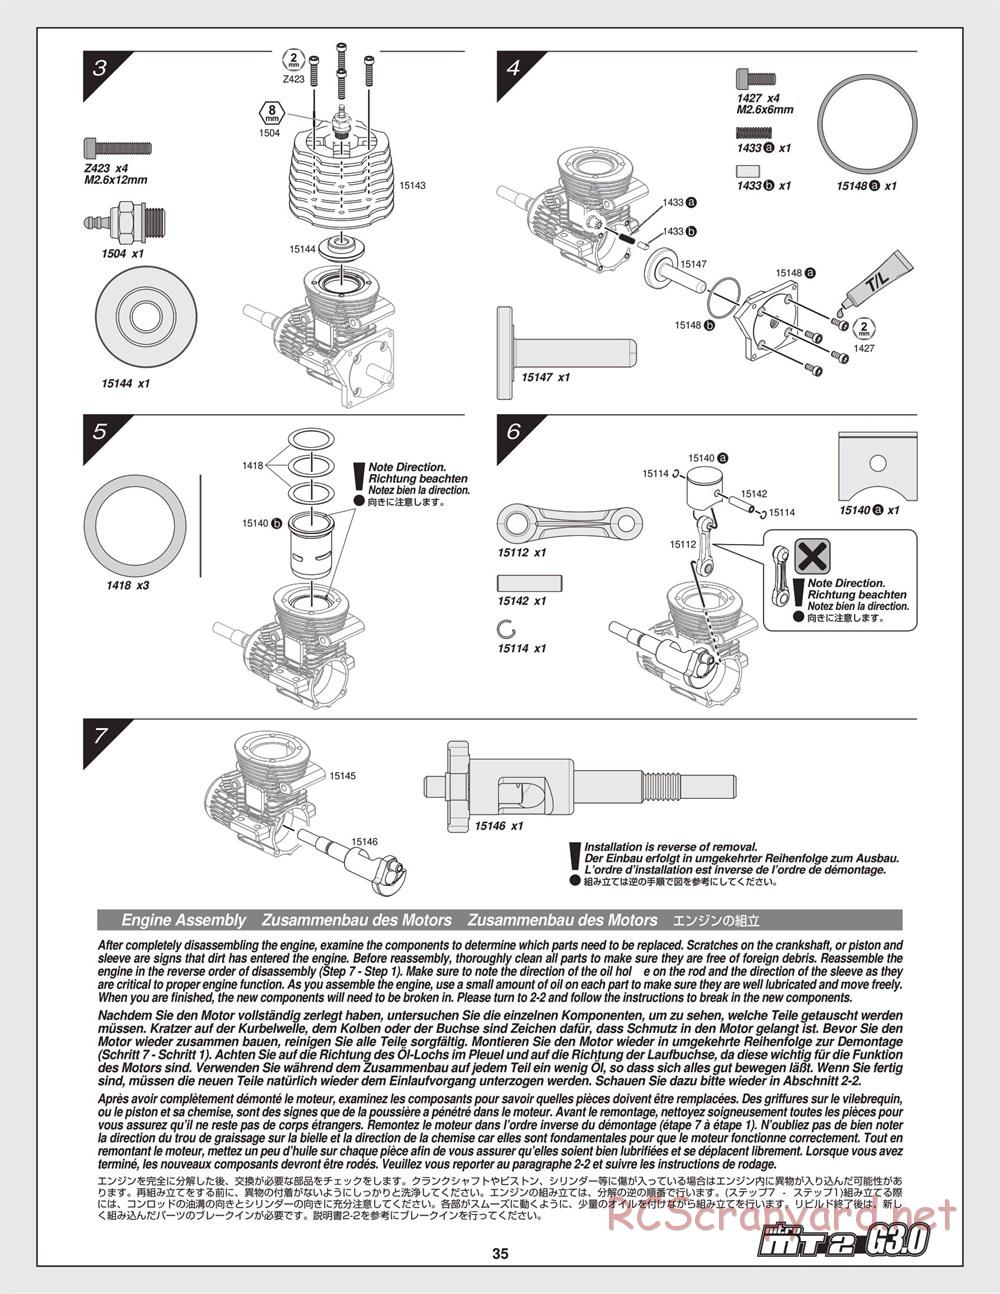 HPI - Nitro MT2 G3.0 - Manual - Page 35